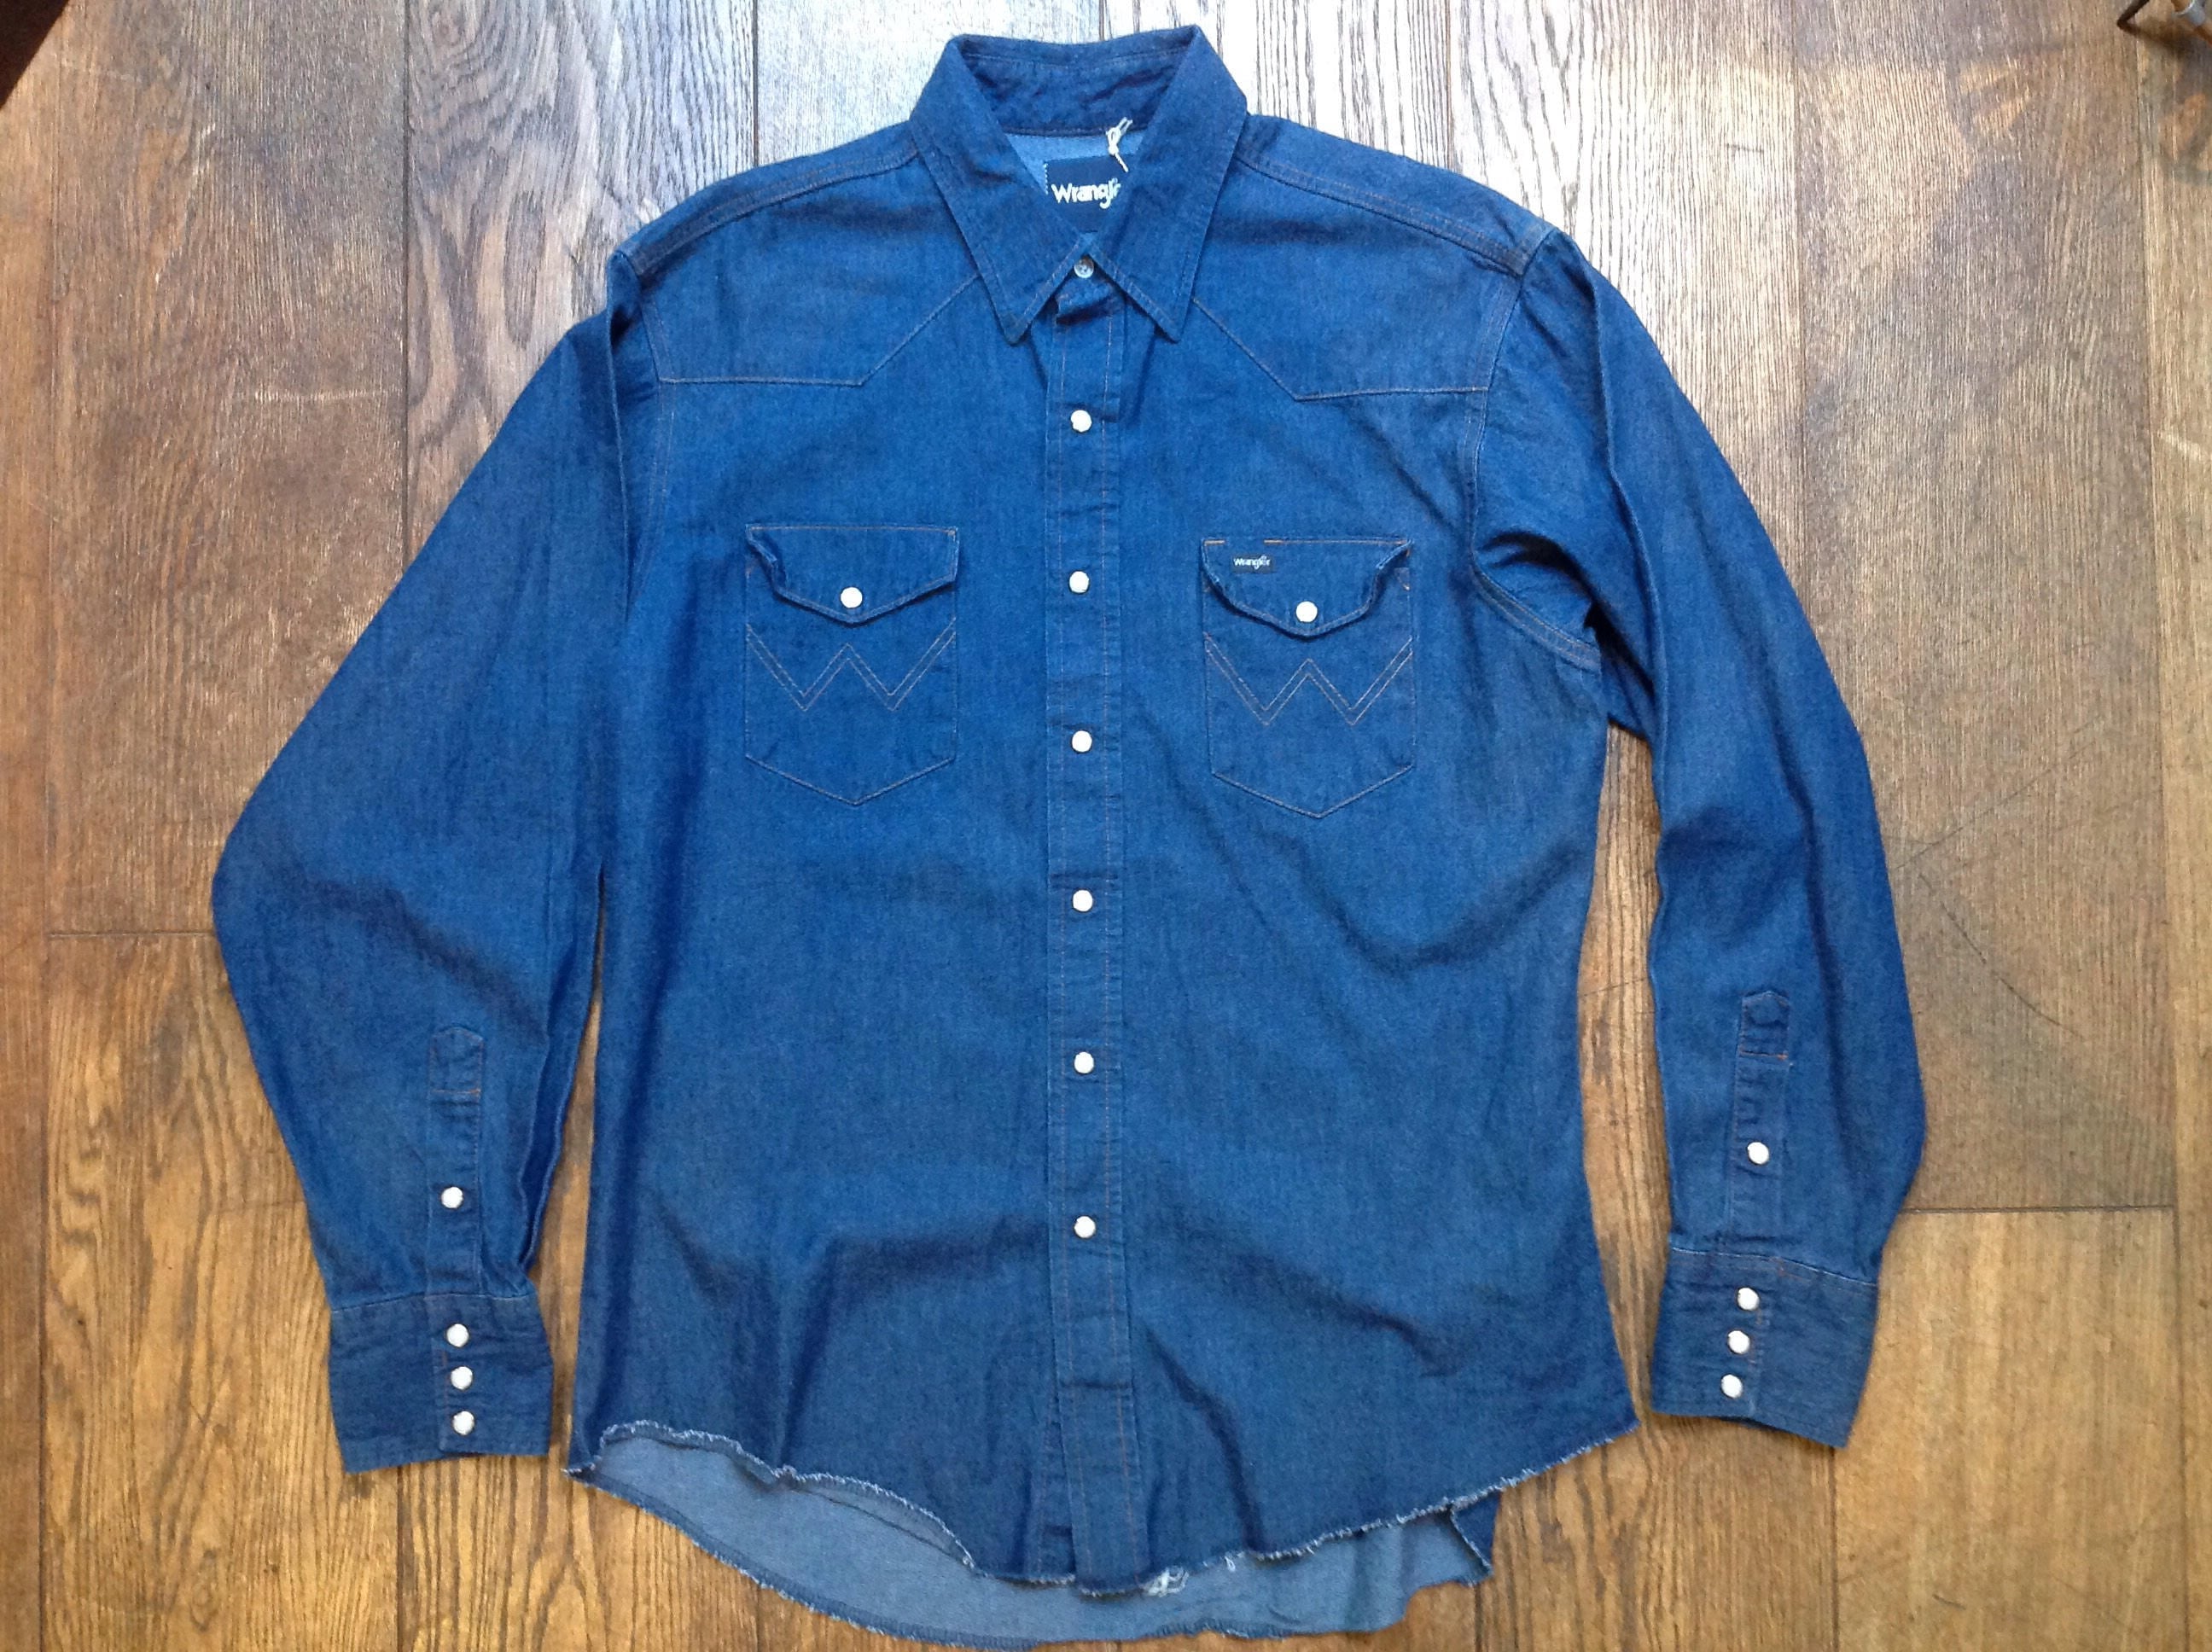 Vintage Wrangler blue indigo denim Western cowboy shirt 48 chest